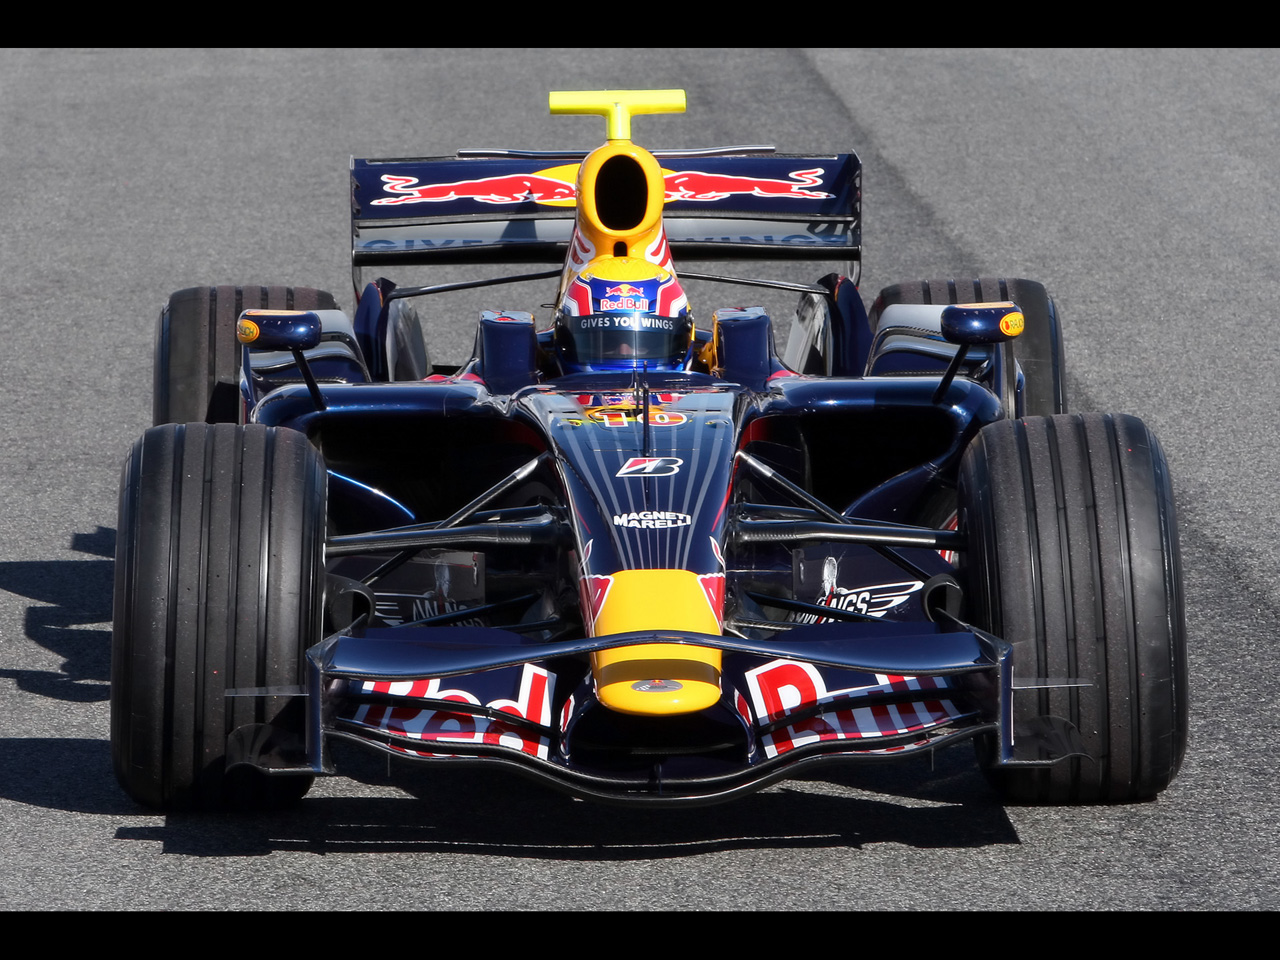 2008 Red Bull RB4 F1